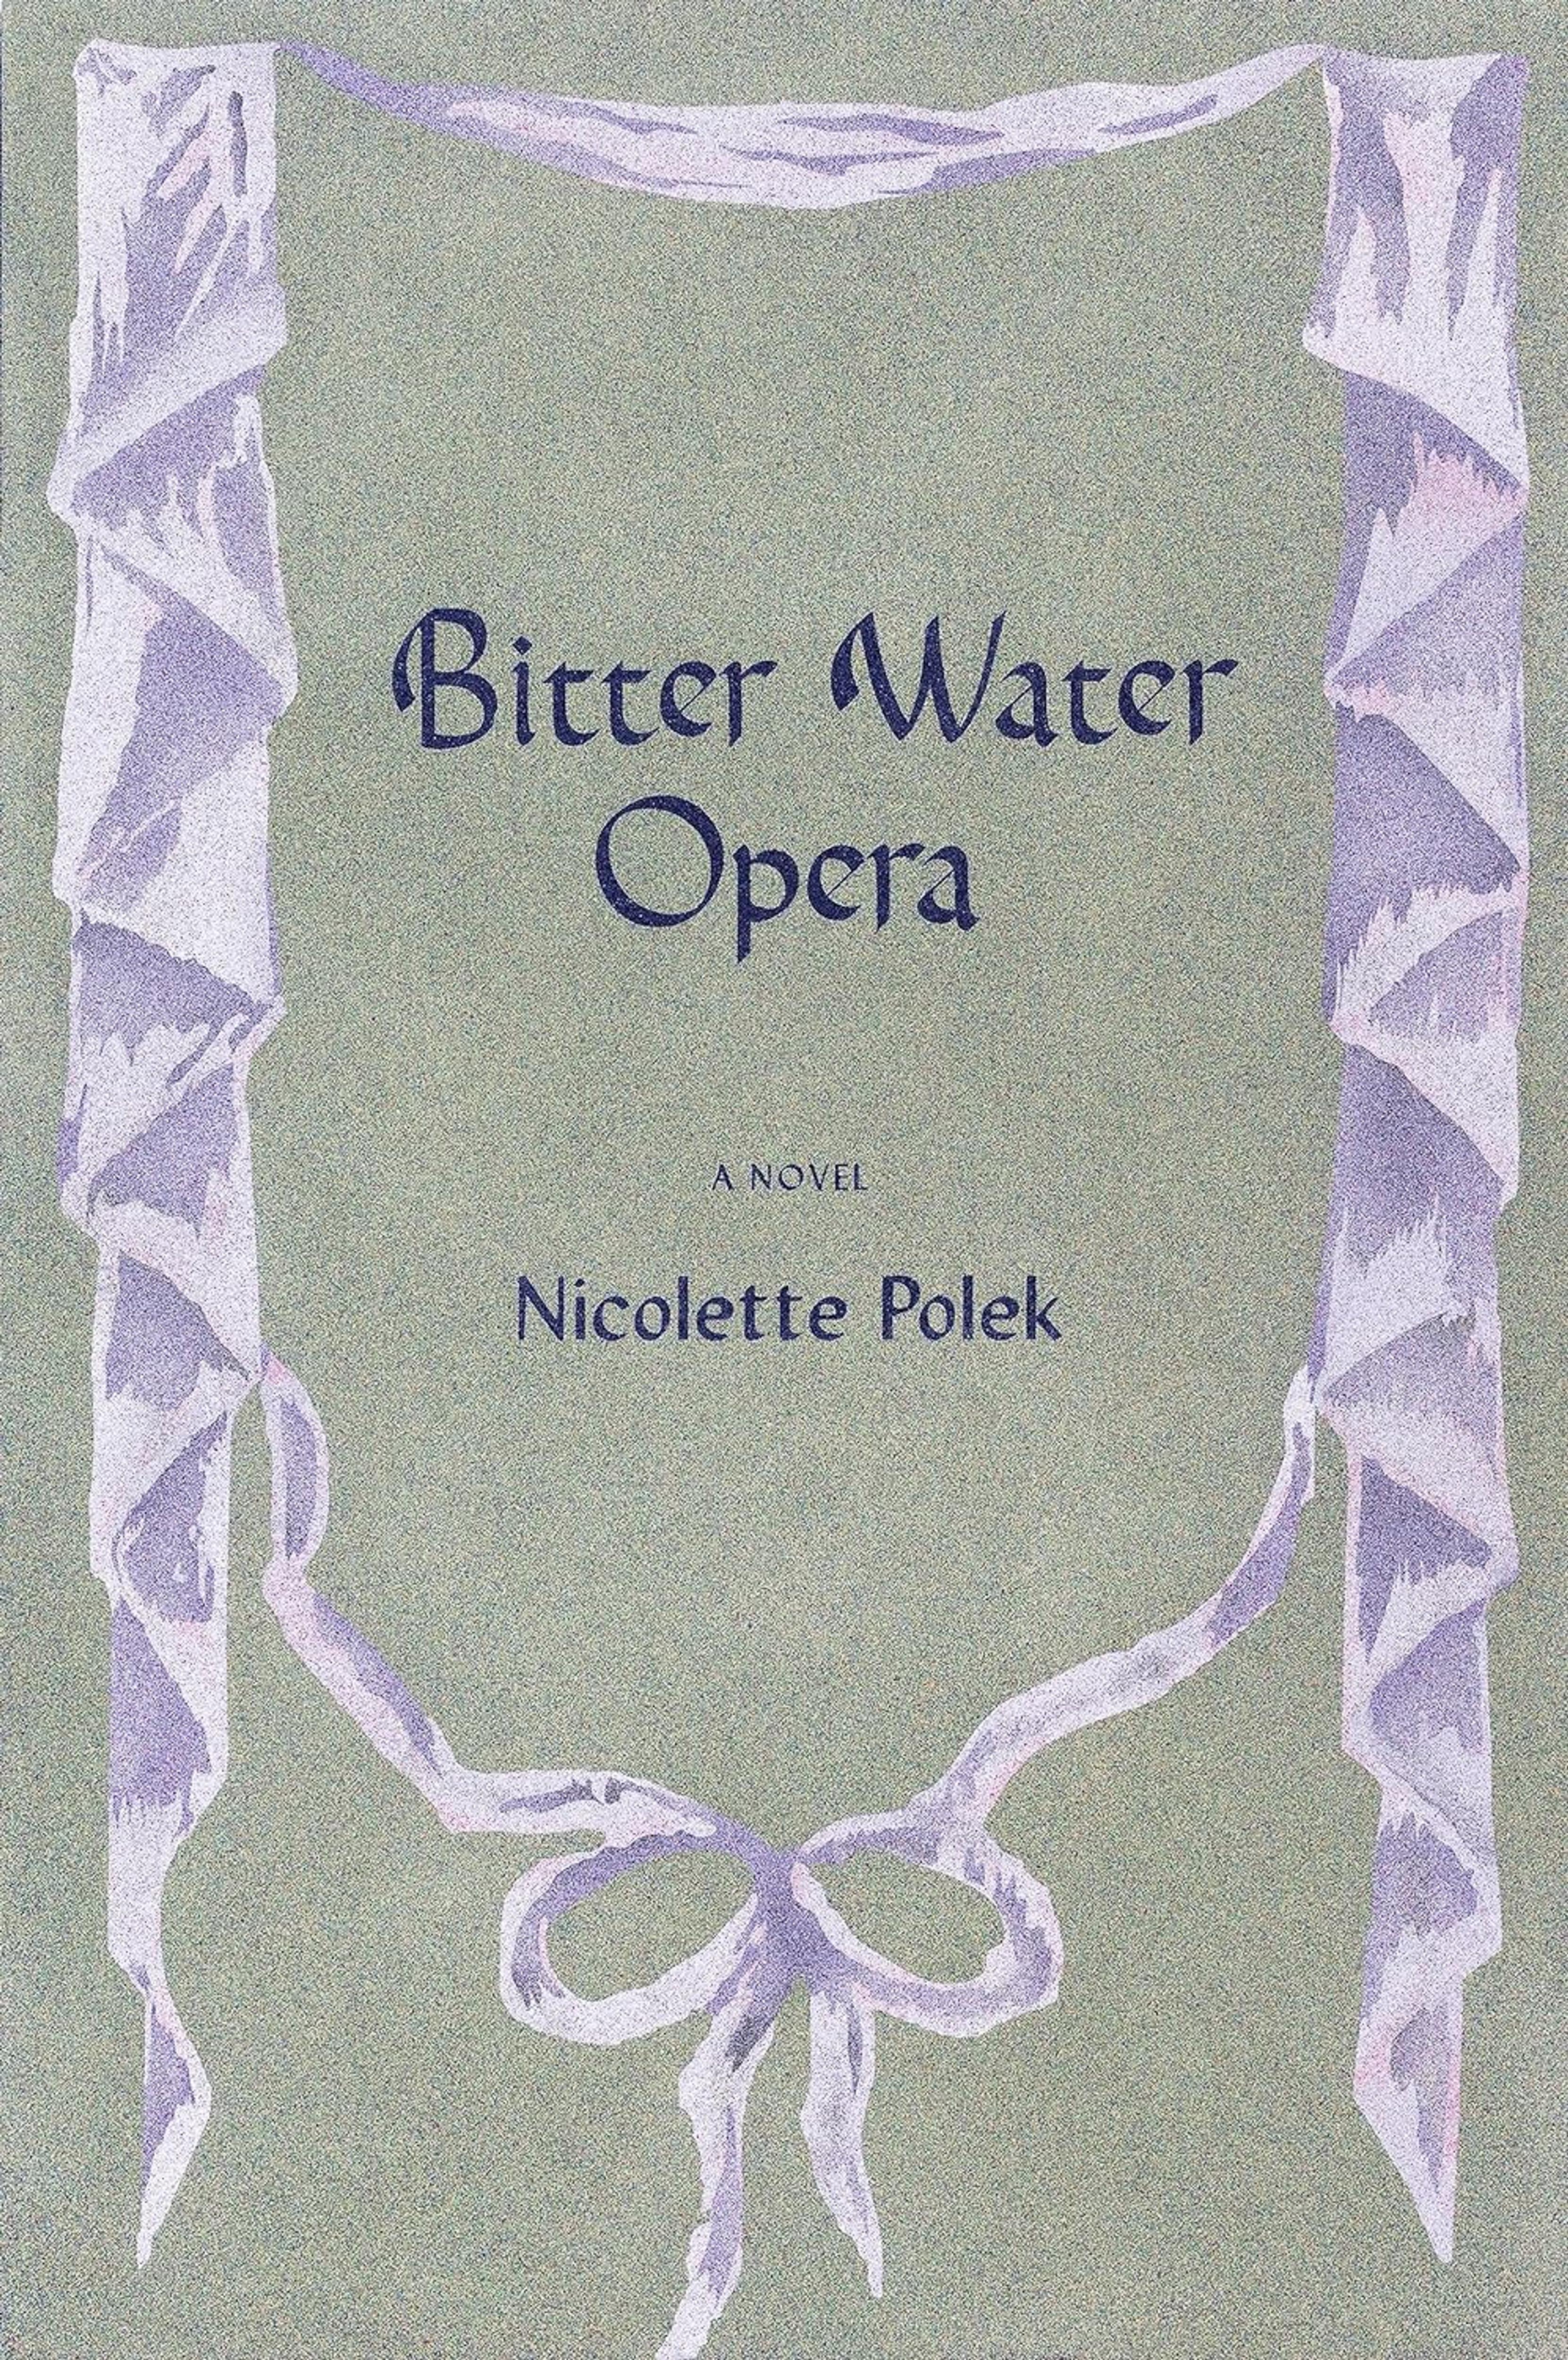 Sweet Emptiness: On Nicolette Polek’s “Bitter Water Opera”